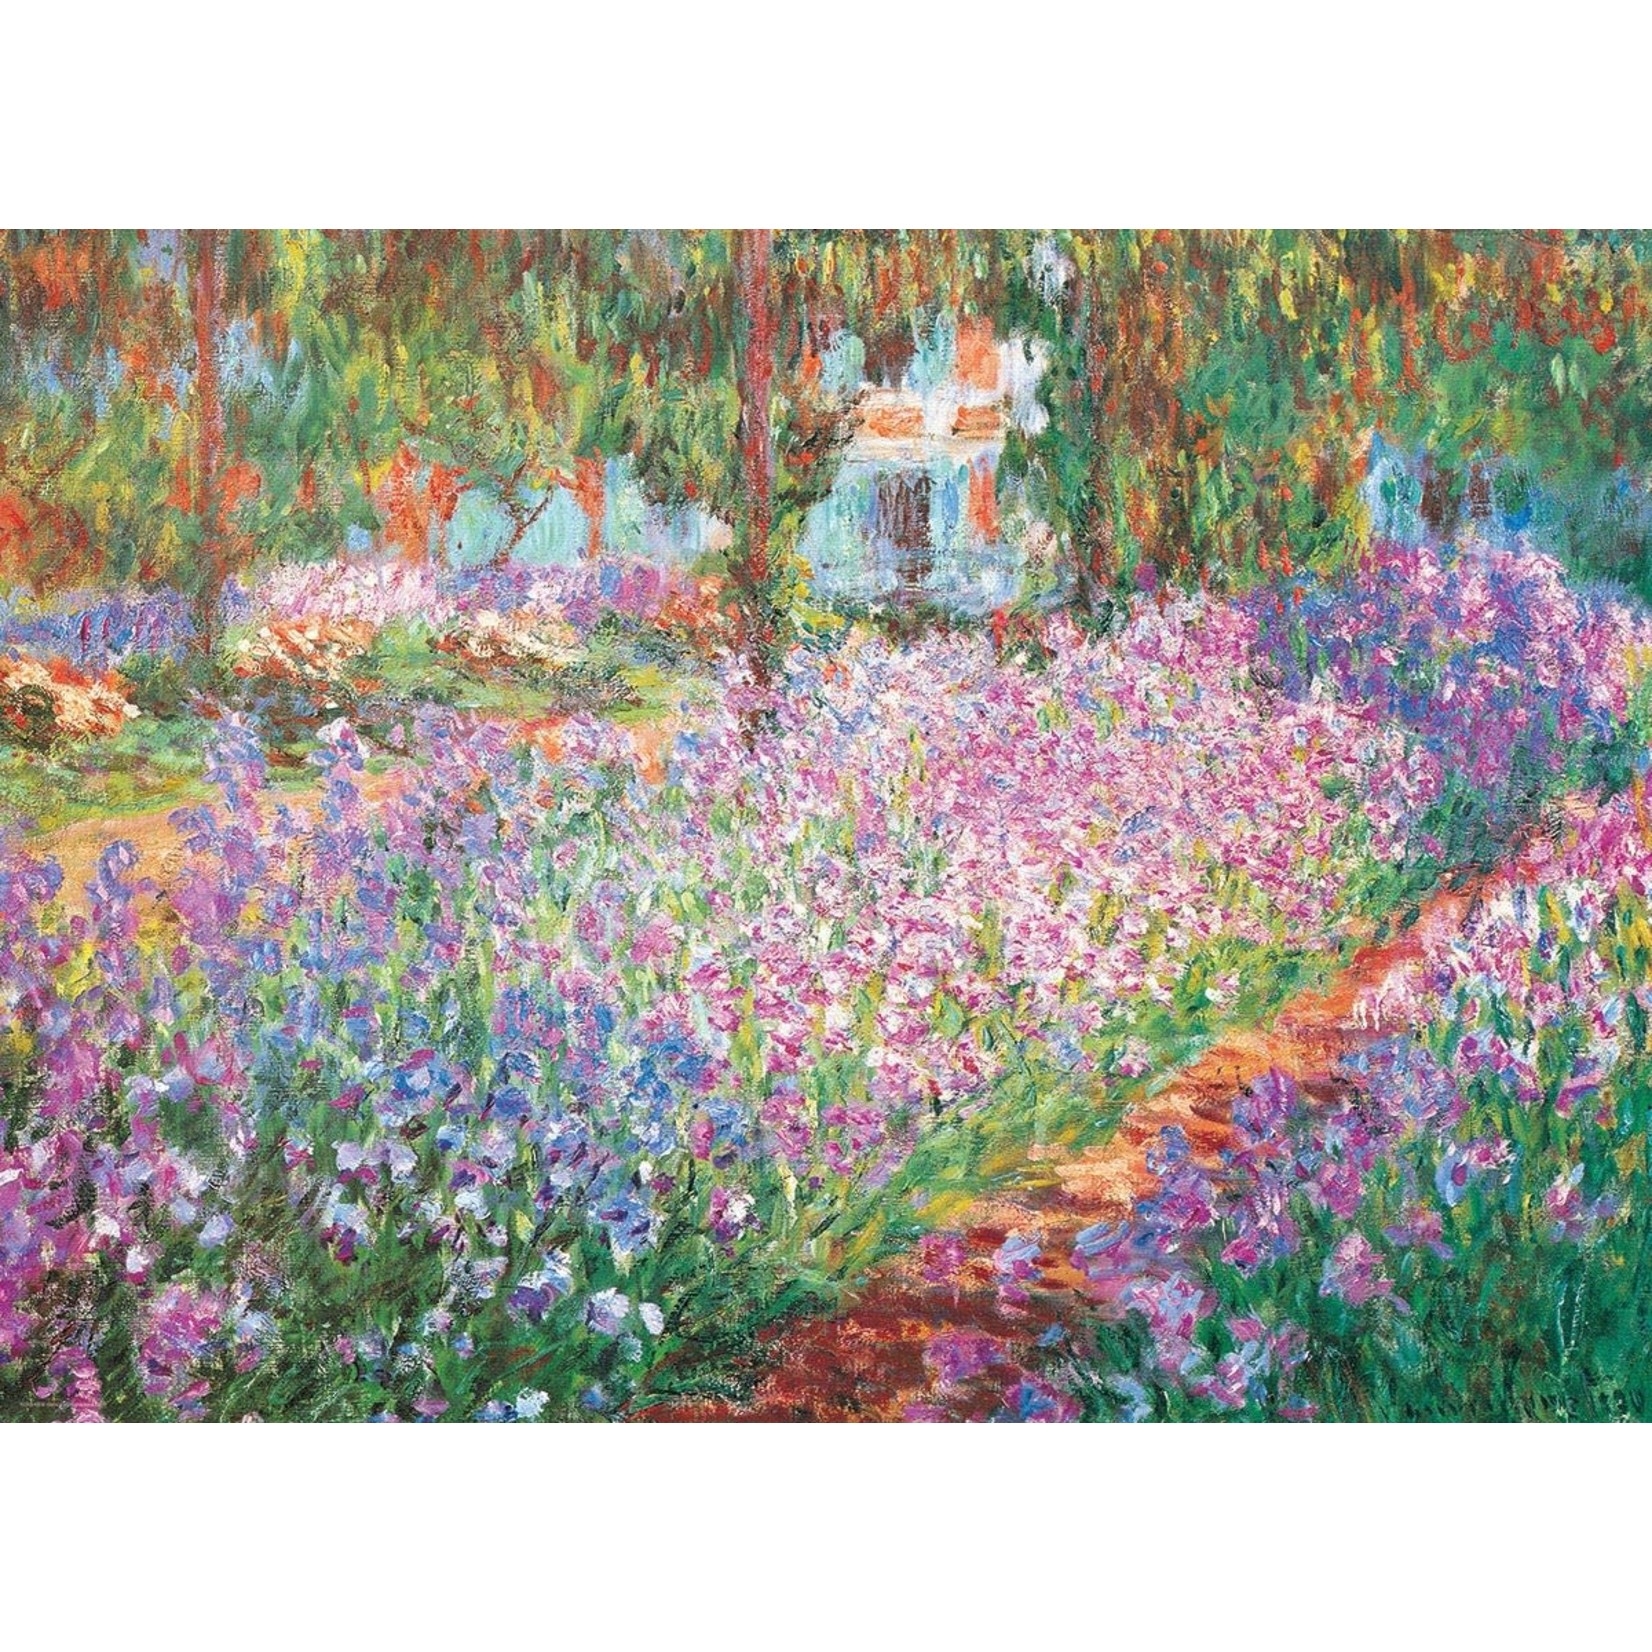 Monet's Garden by Claude Monet 2000pc